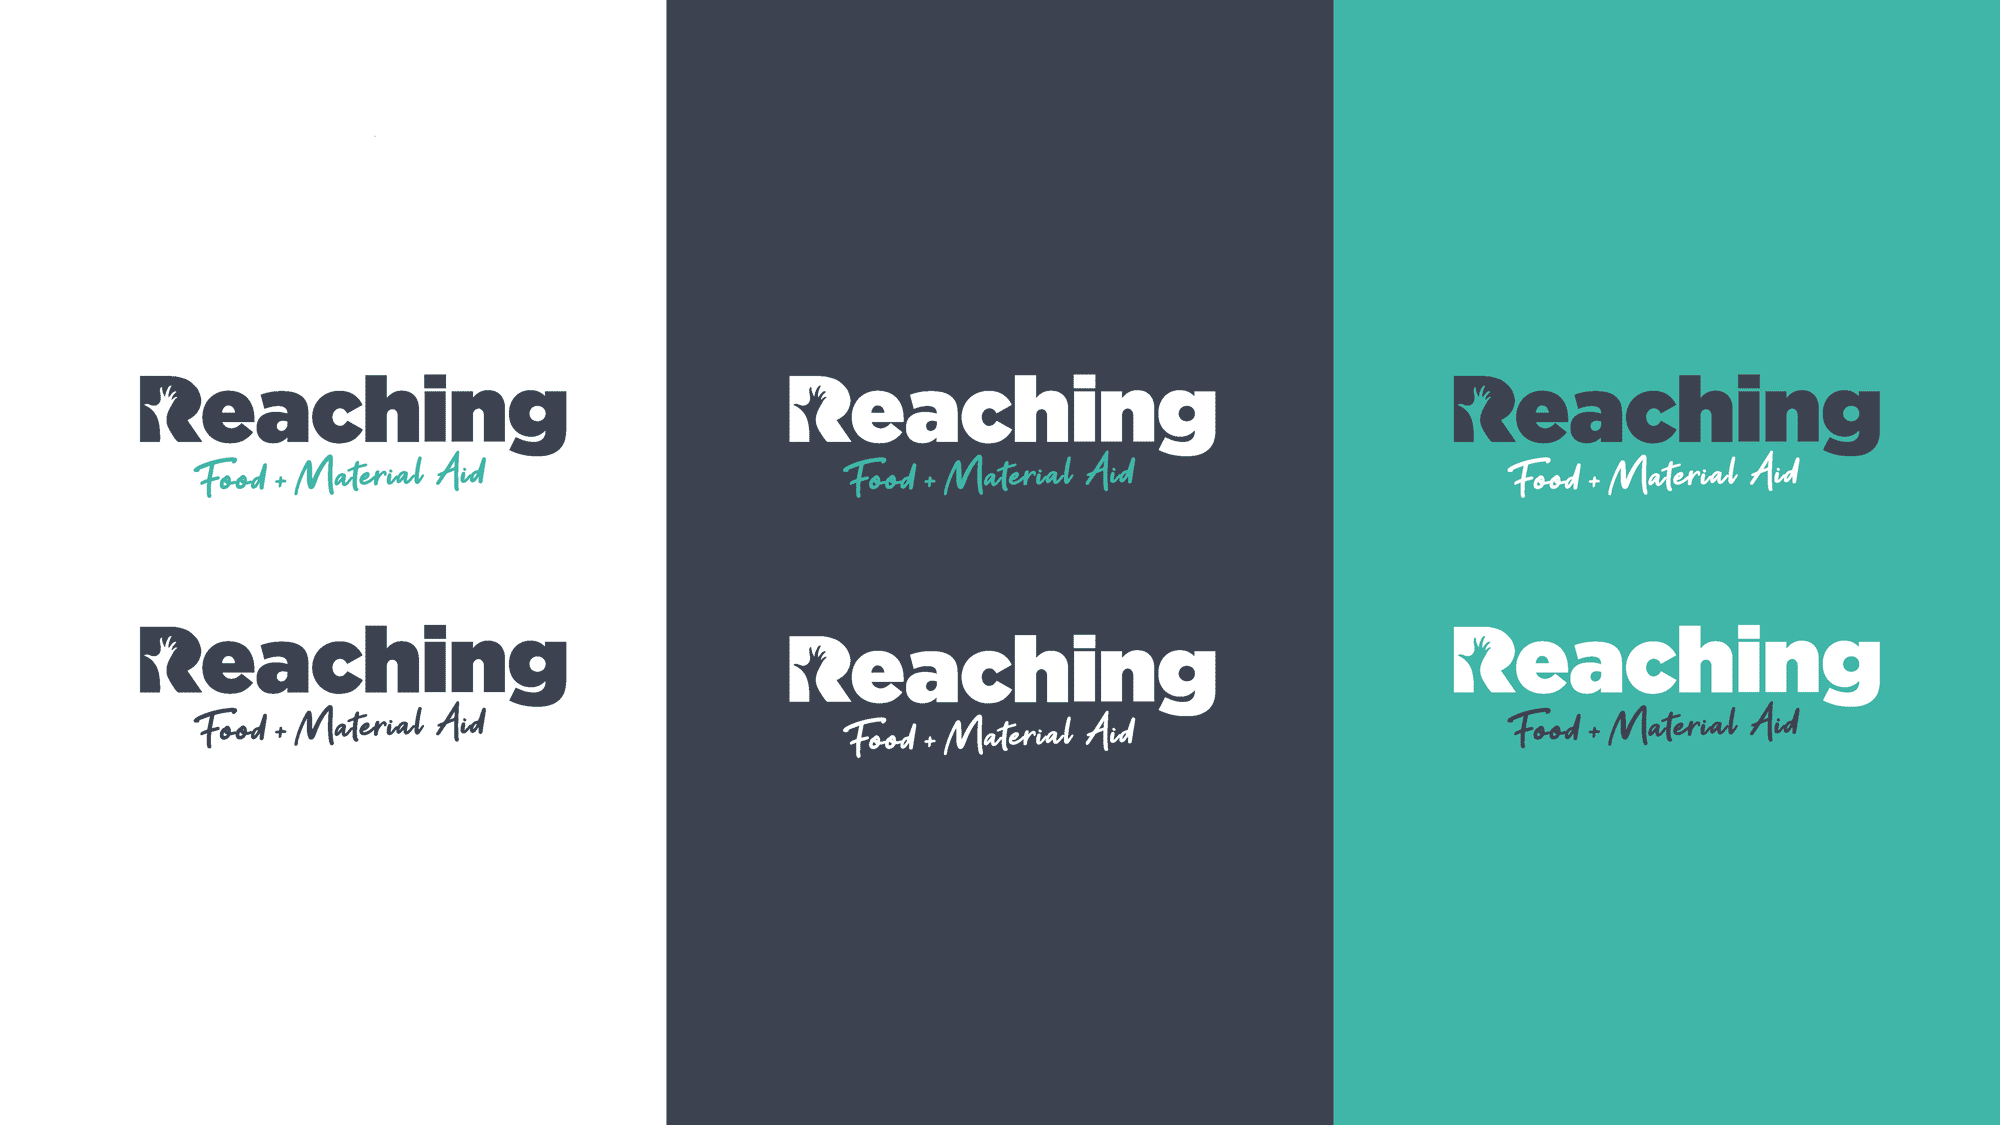 Reaching brand logo colour variations